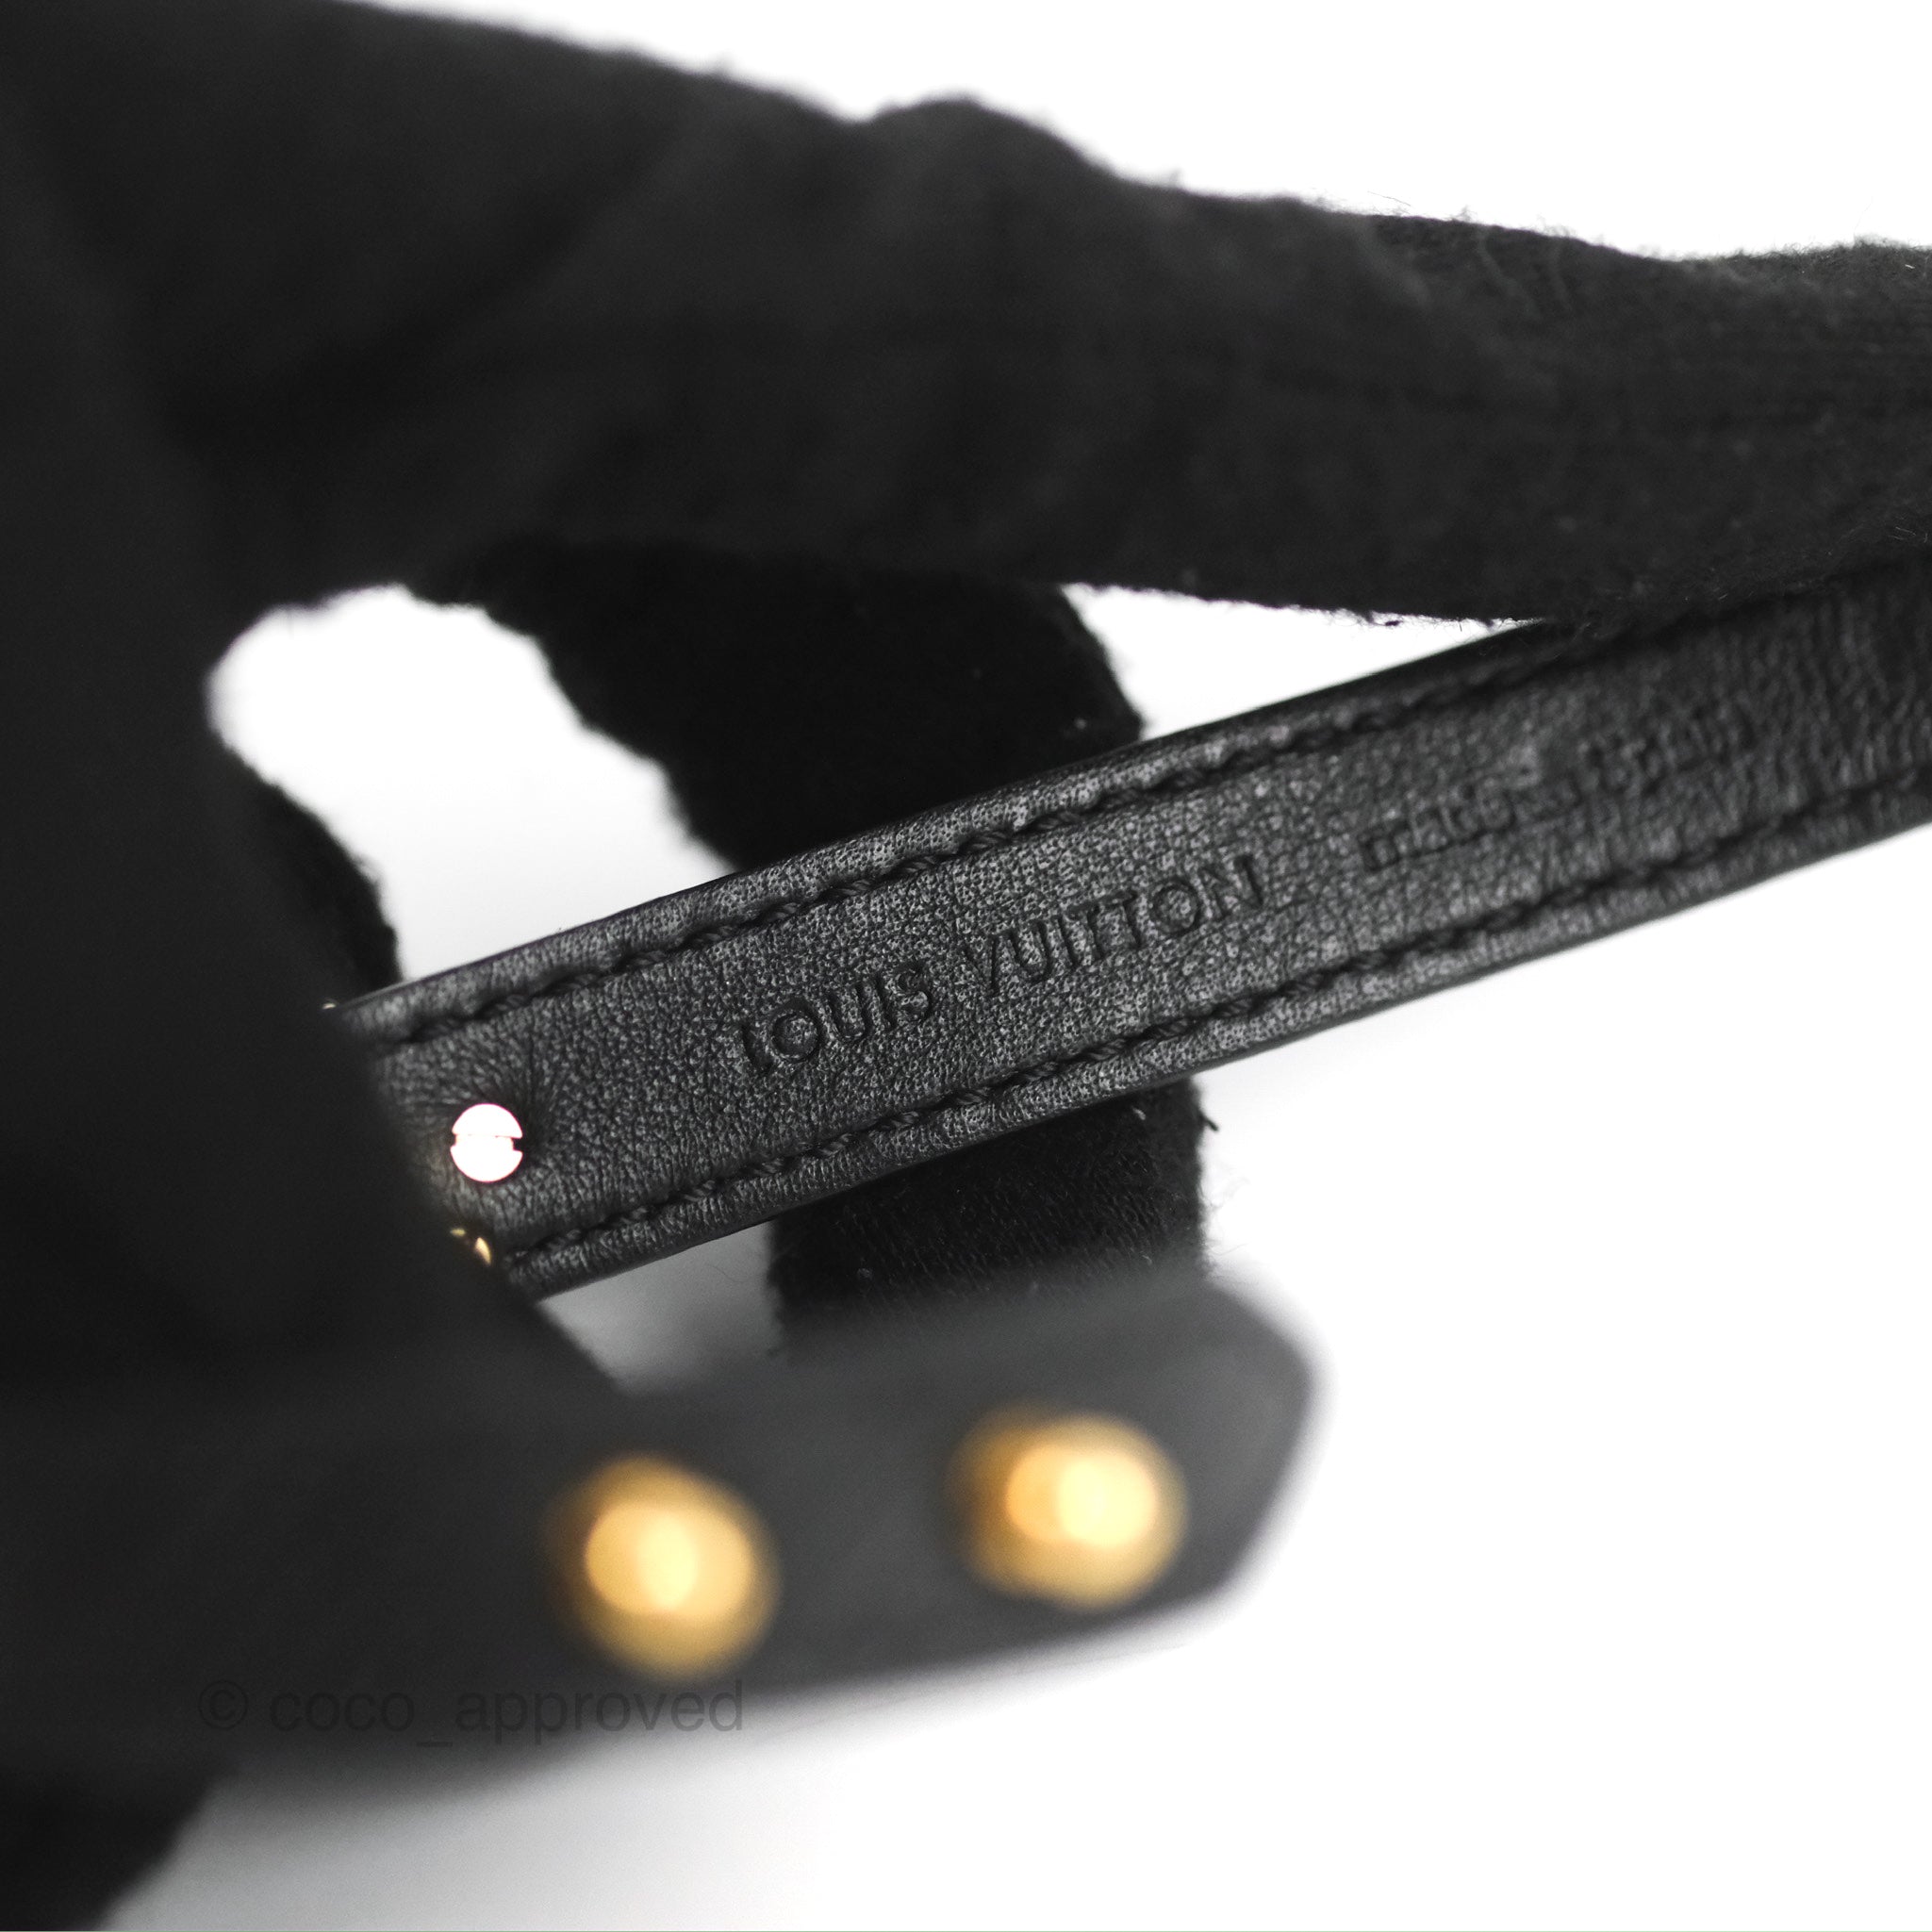 Louis Vuitton Bandouliere Strap Black Monogram – Coco Approved Studio